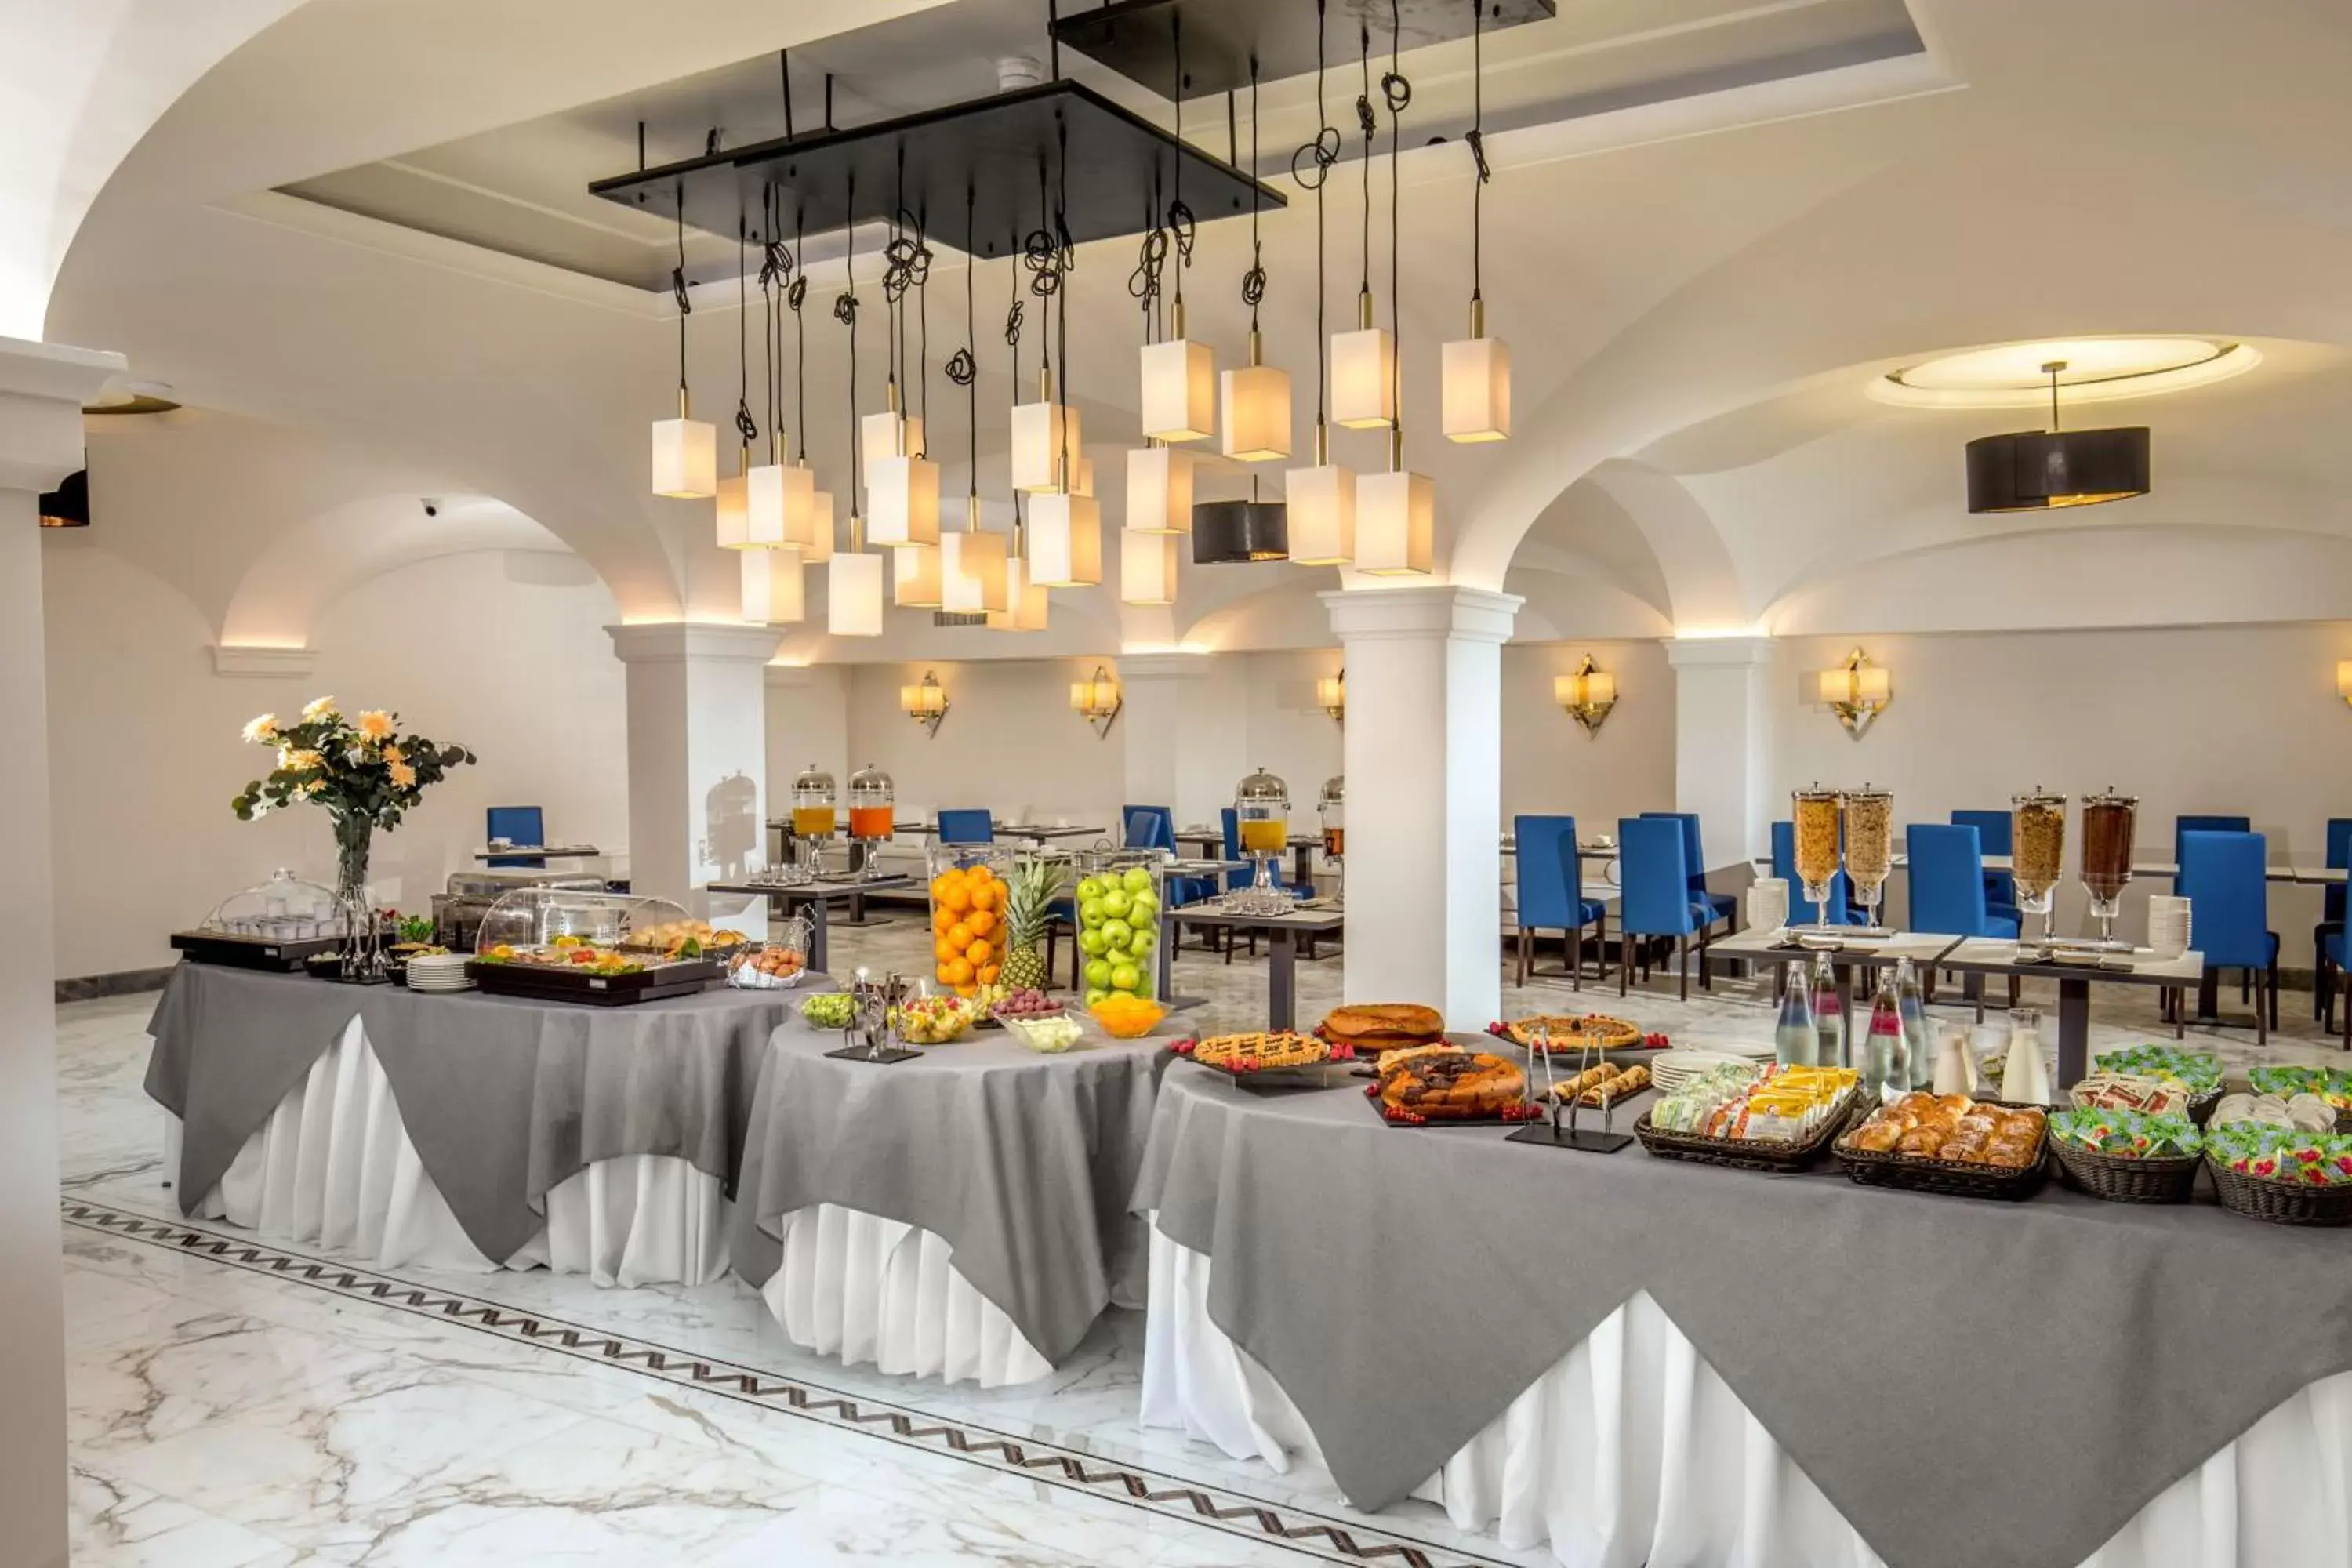 Buffet breakfast, Banquet Facilities in Hotel Shangri-La Roma by OMNIA hotels